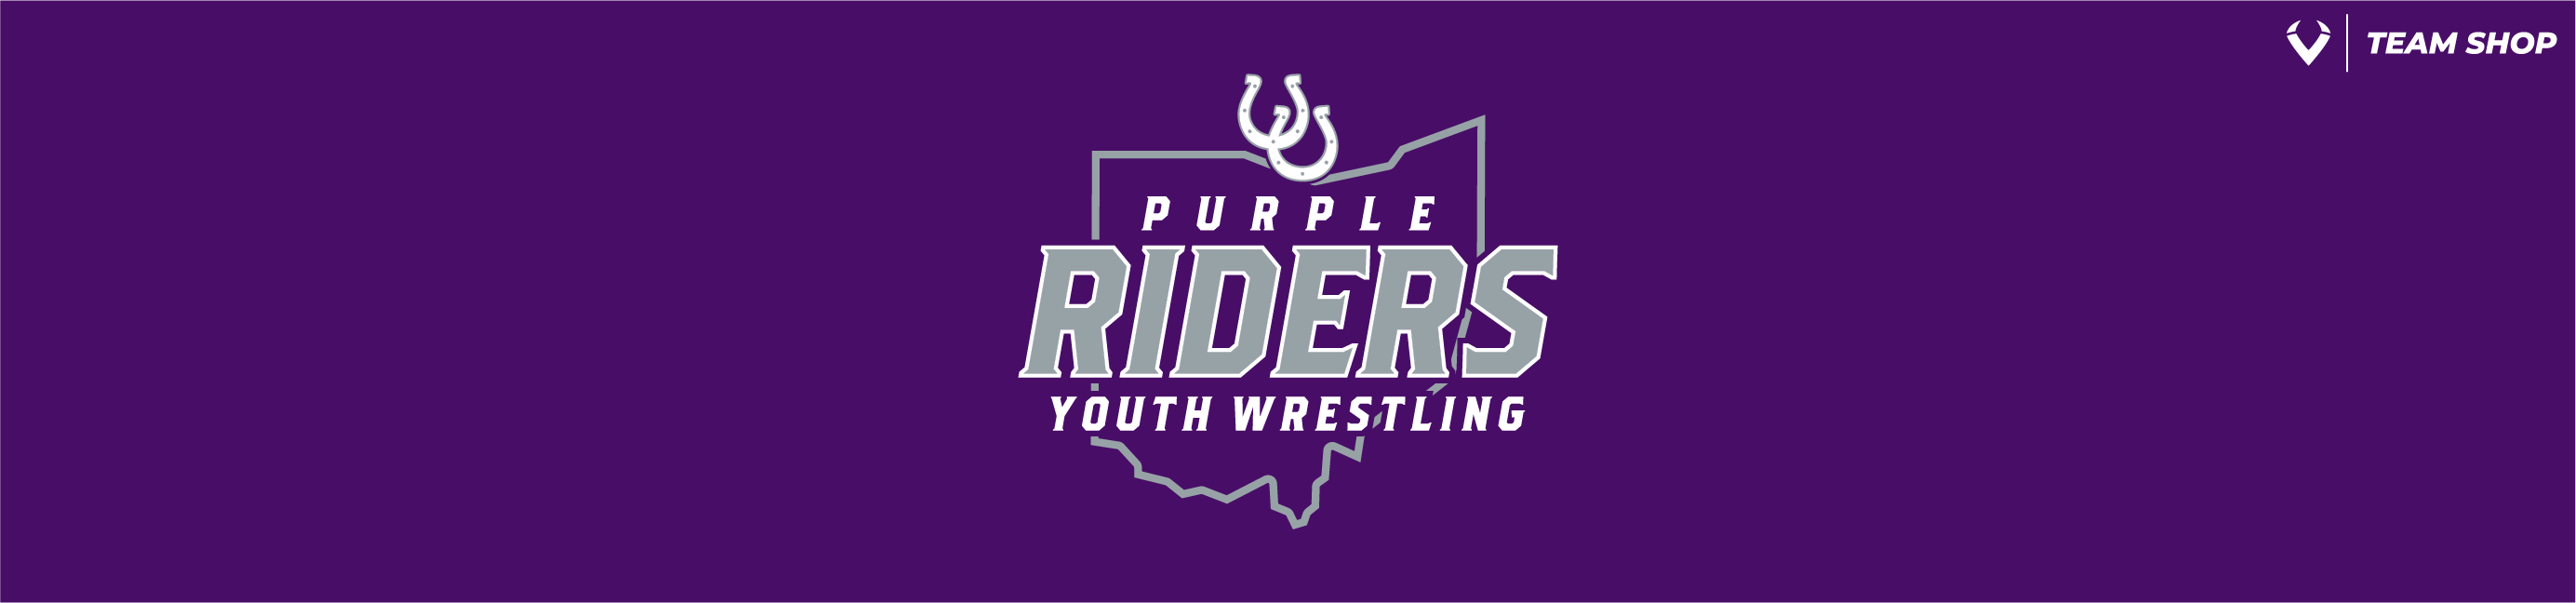 Purple Riders Youth Wrestling